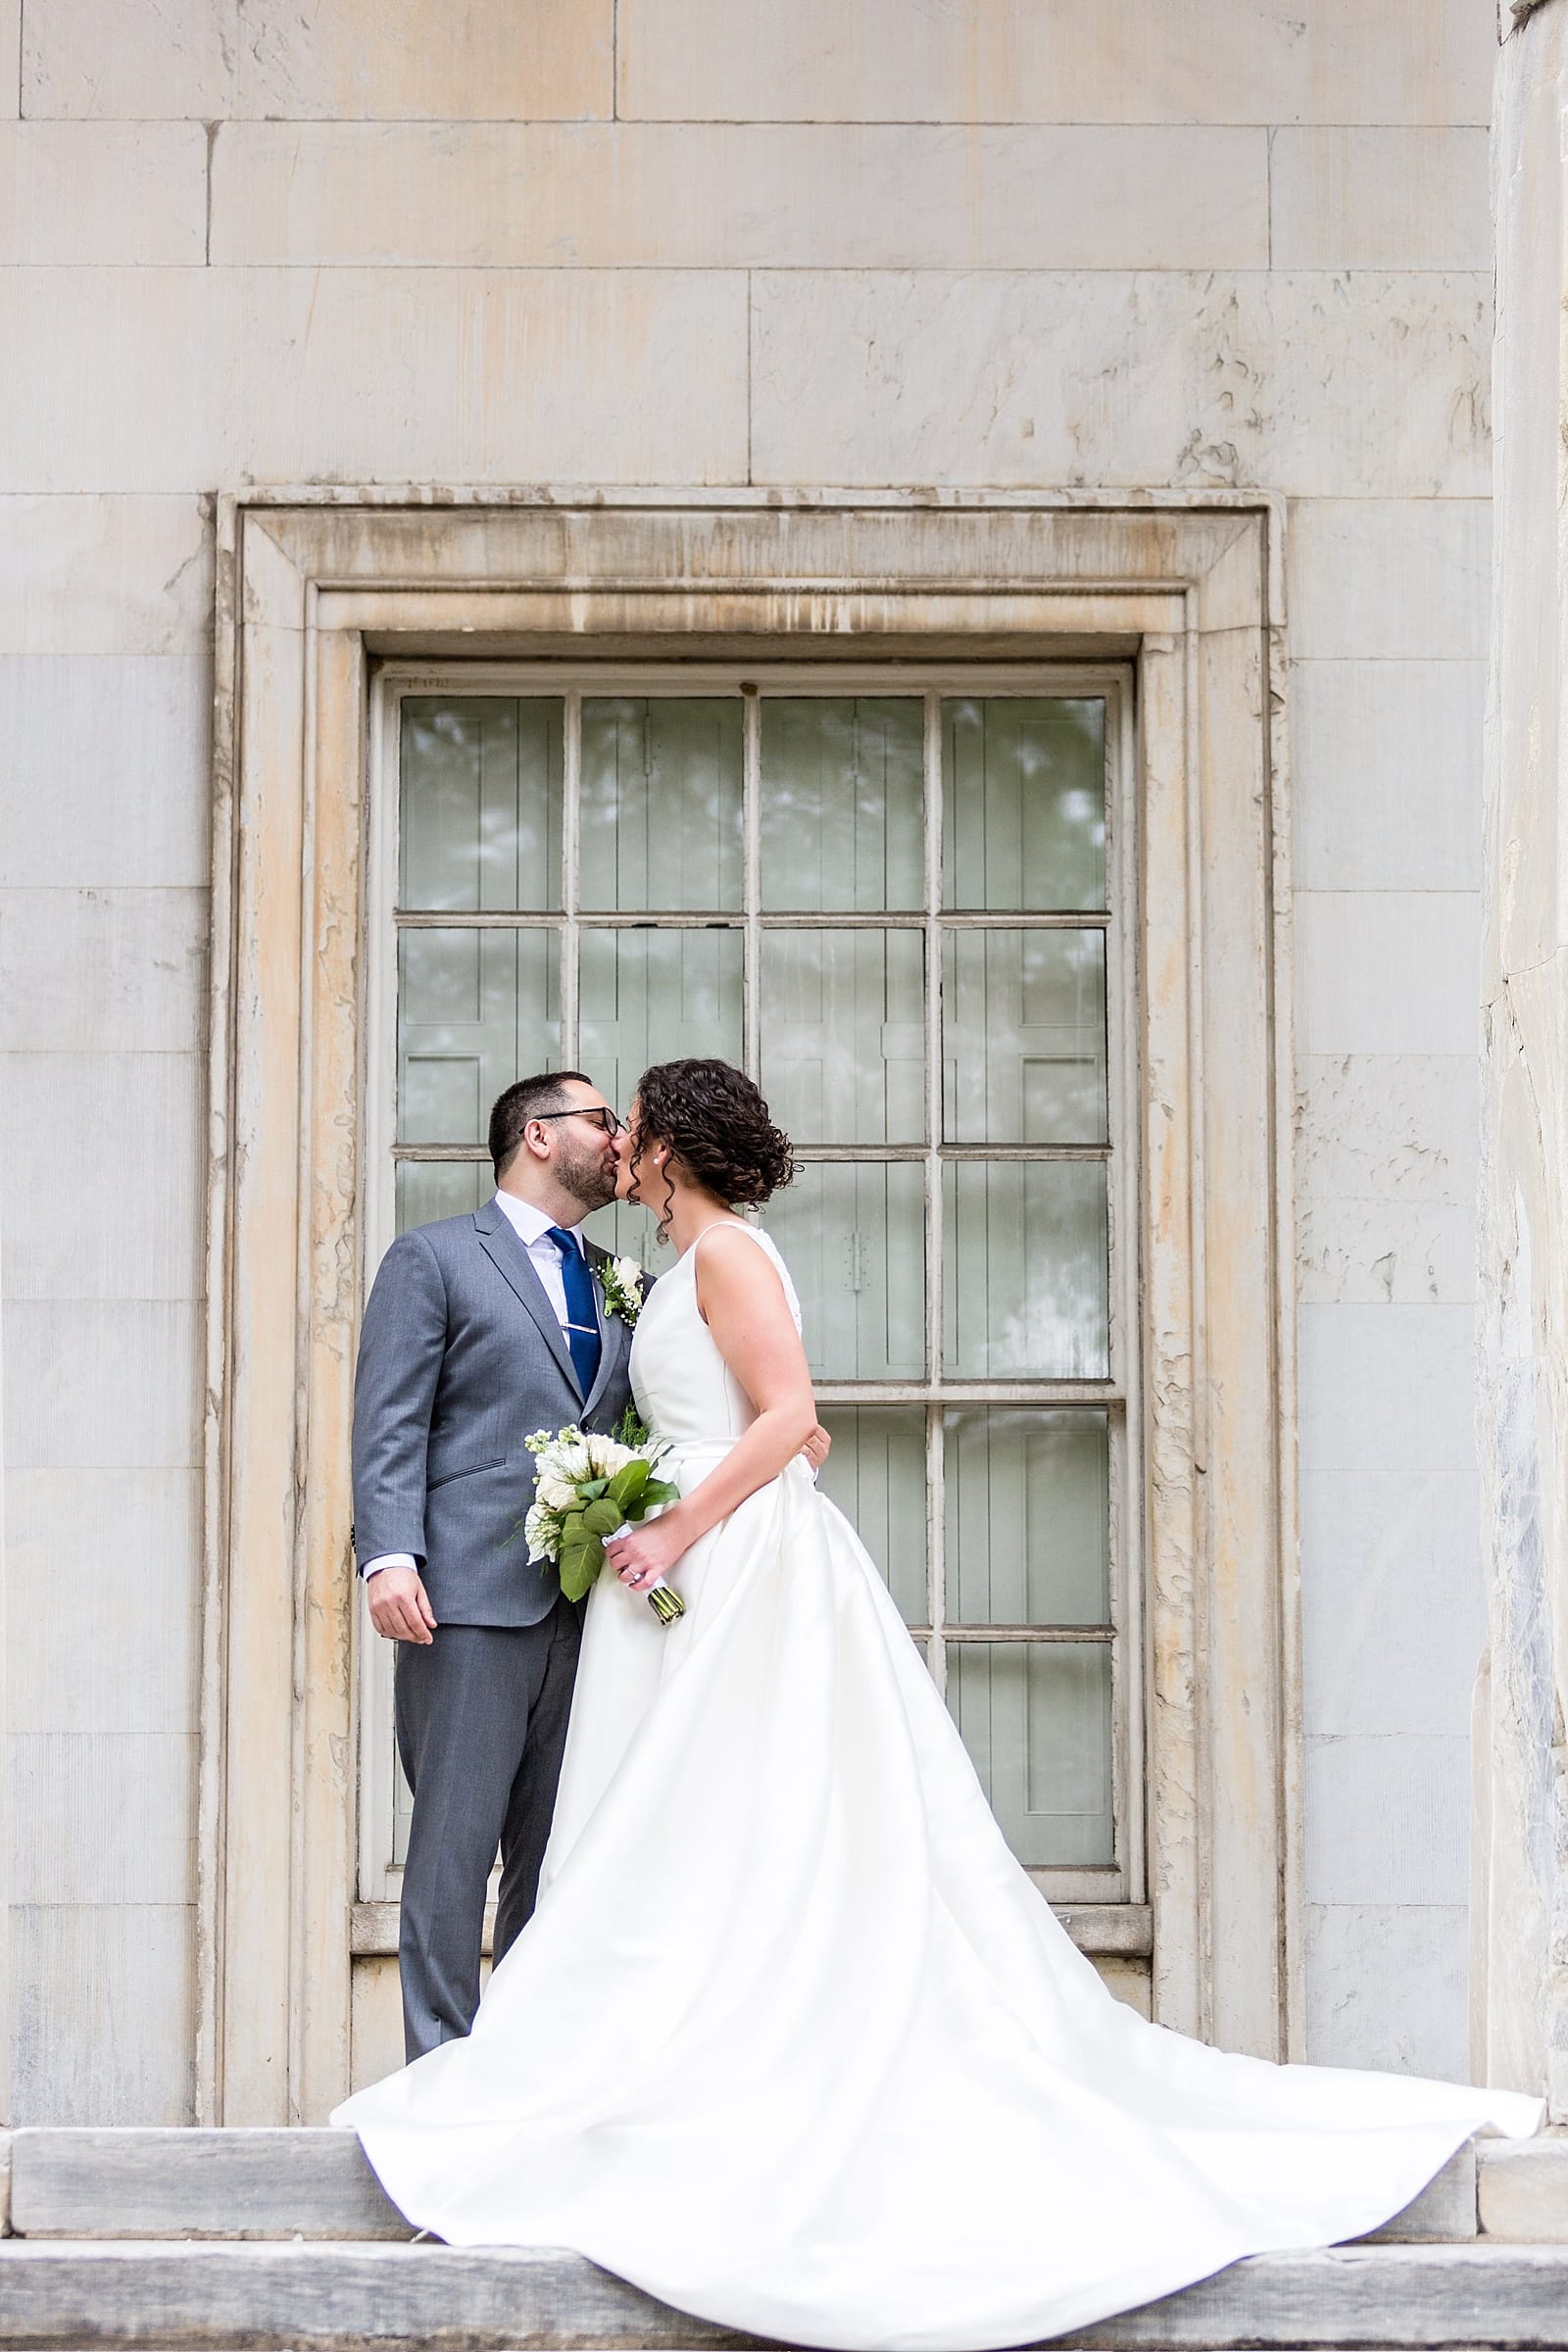 Wedding portraits at Philadelphia's Second National Bank before a Richmond Hall wedding